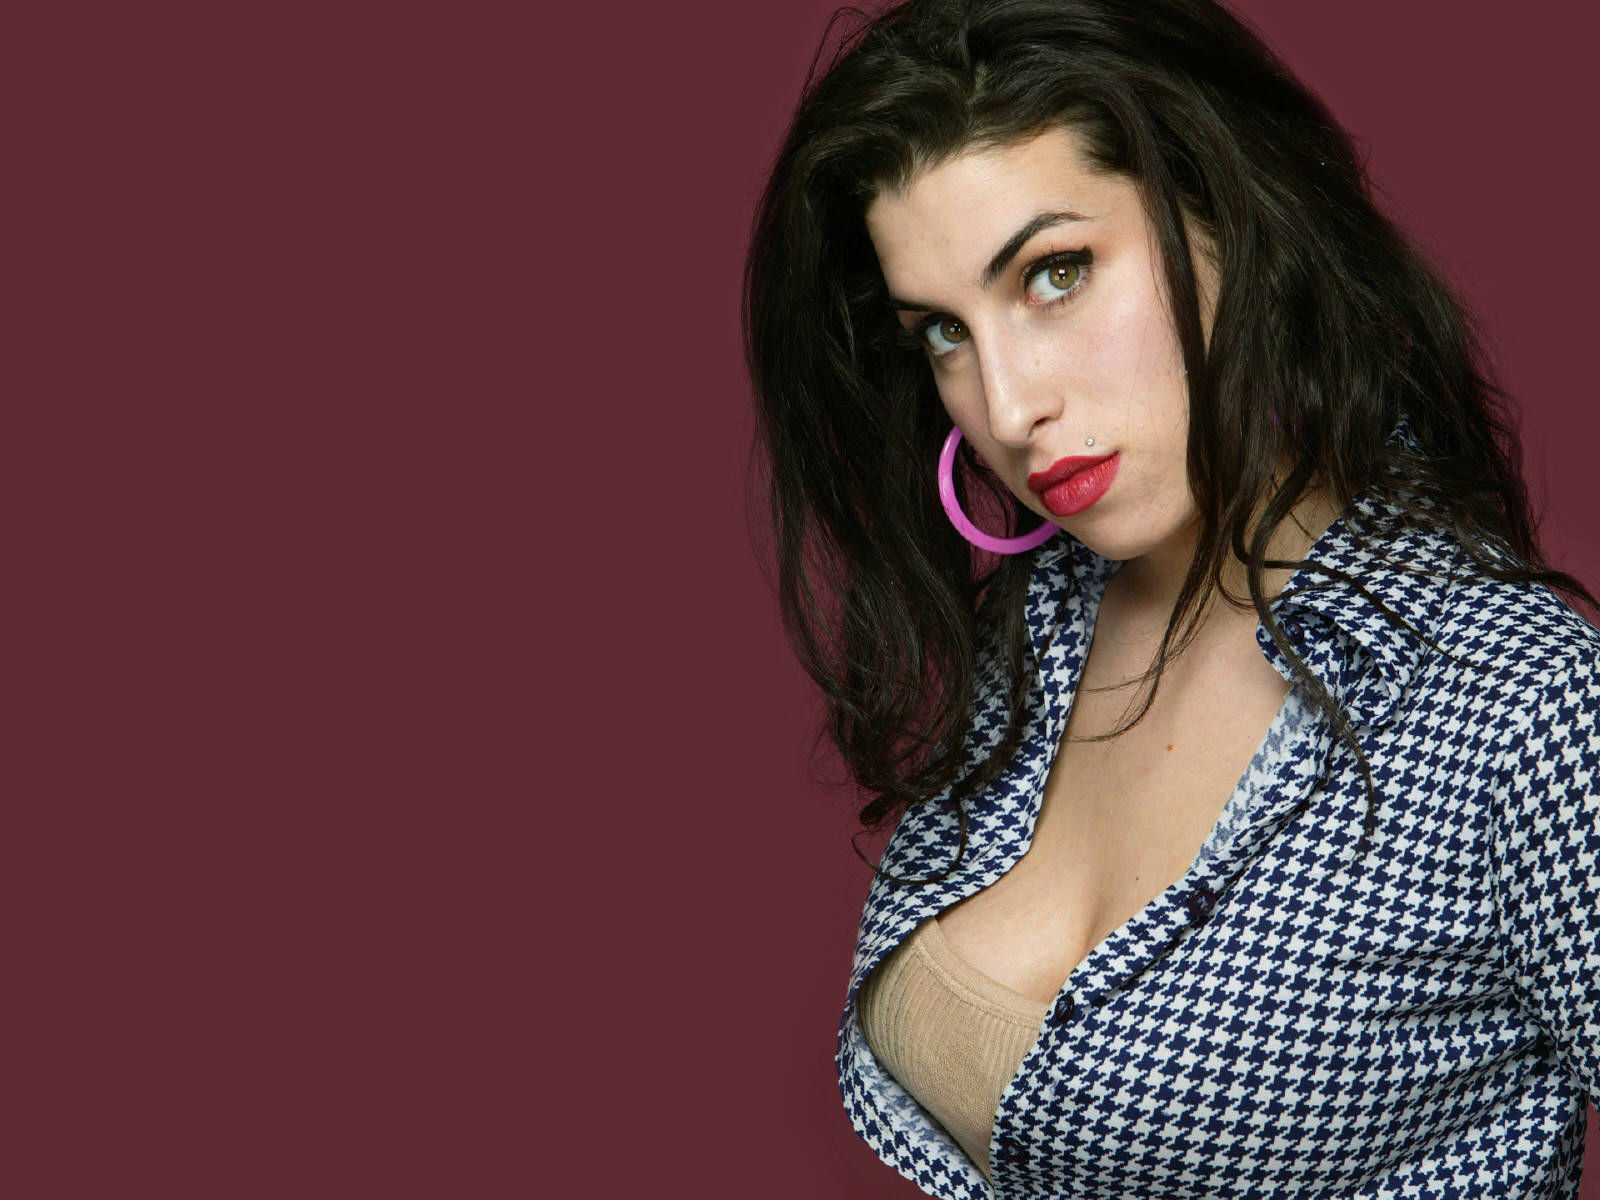 Fond d'ecran Amy Winehouse prend la pose